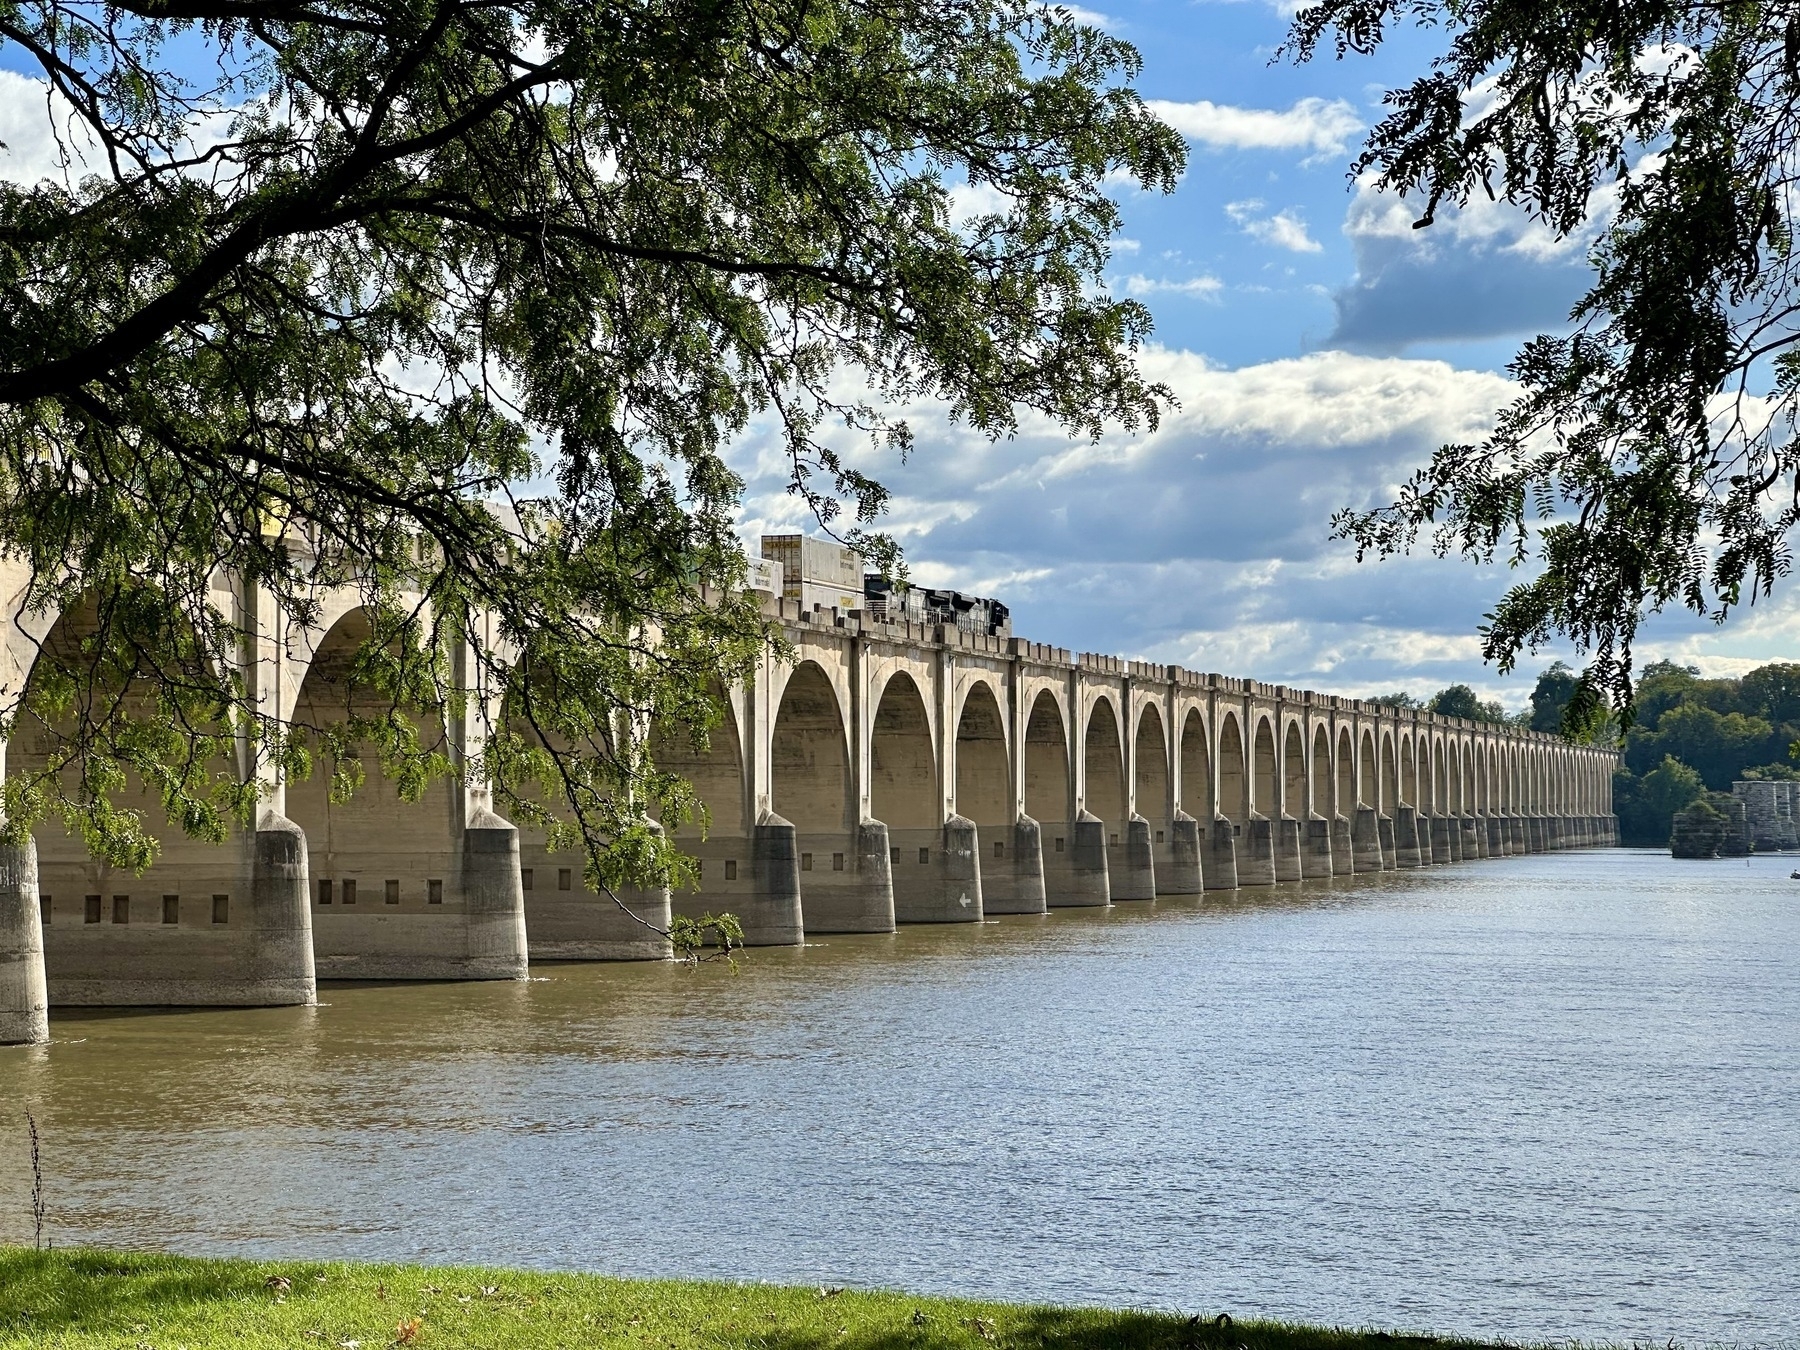 Train crossing the arch bridge over Riverfront Park and the Susquehanna River in Harrisburg Pennsylvania